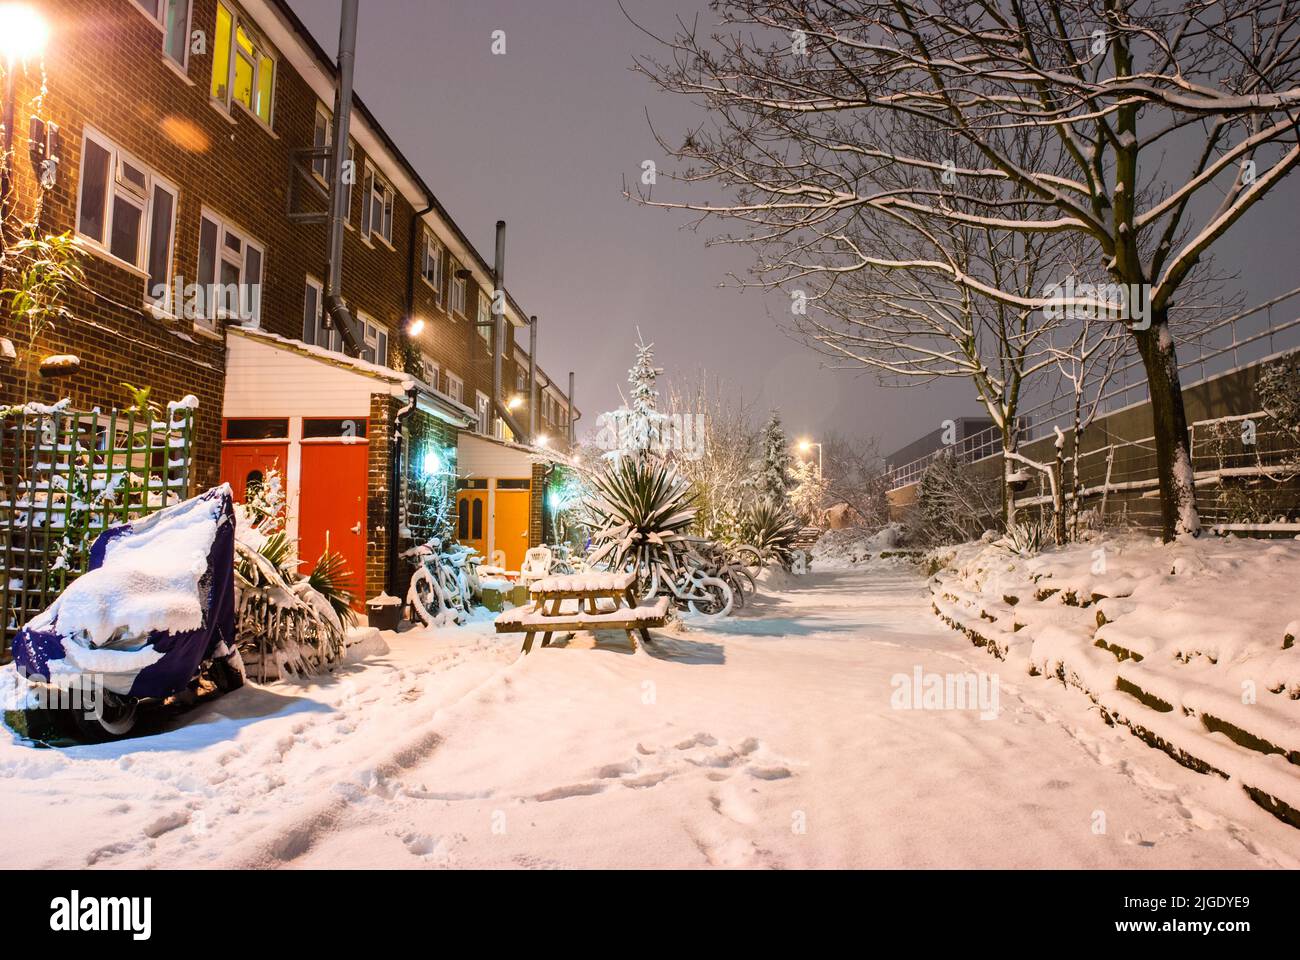 Snowy scene in Sanford street, New Cross - South East London, England Stock Photo